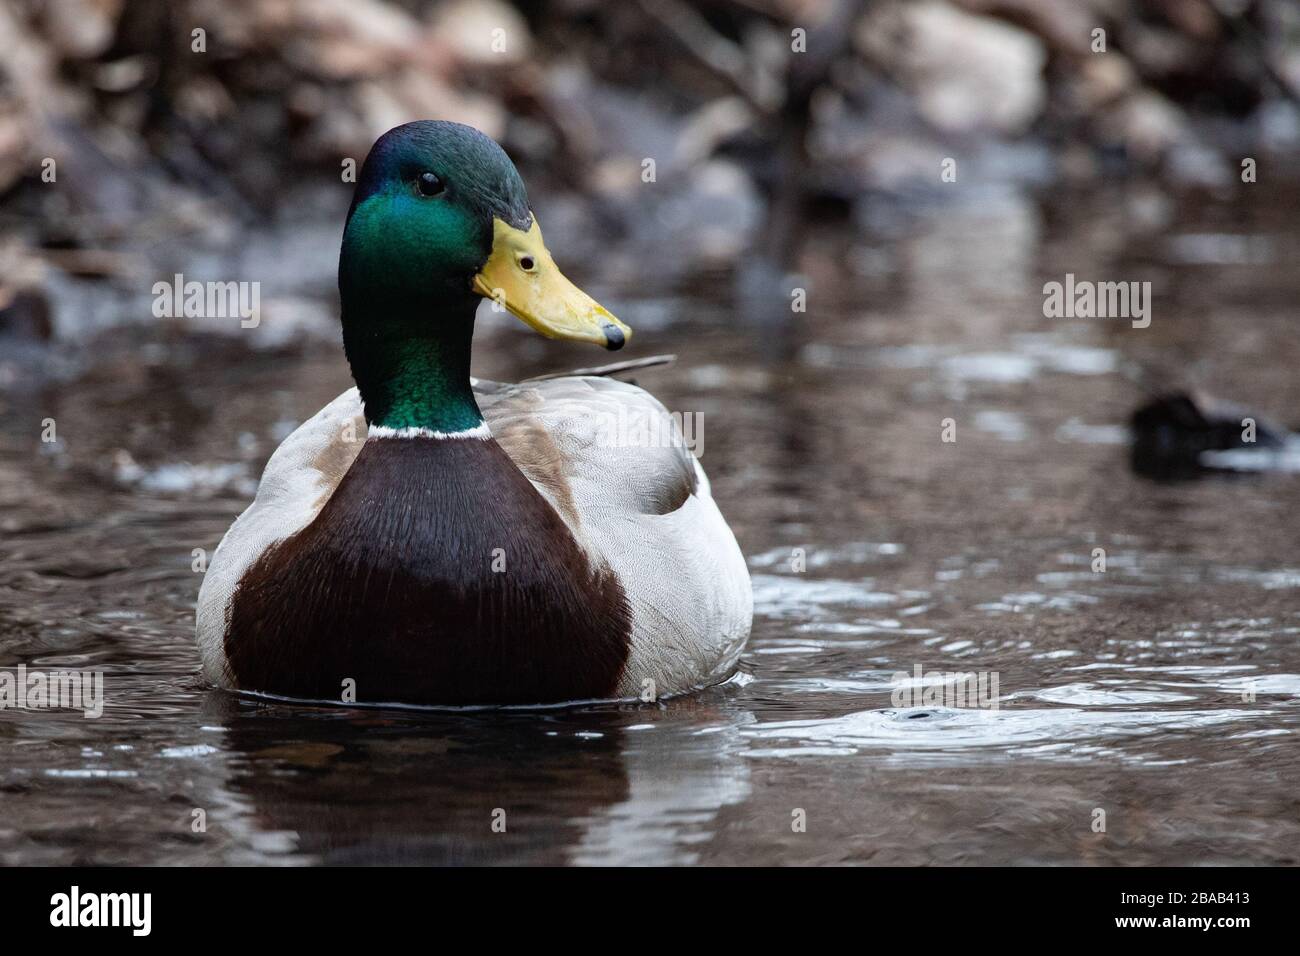 Closeup Pond Swimmer Solitary Green Brown and White Male Mallard Duck Stock Photo